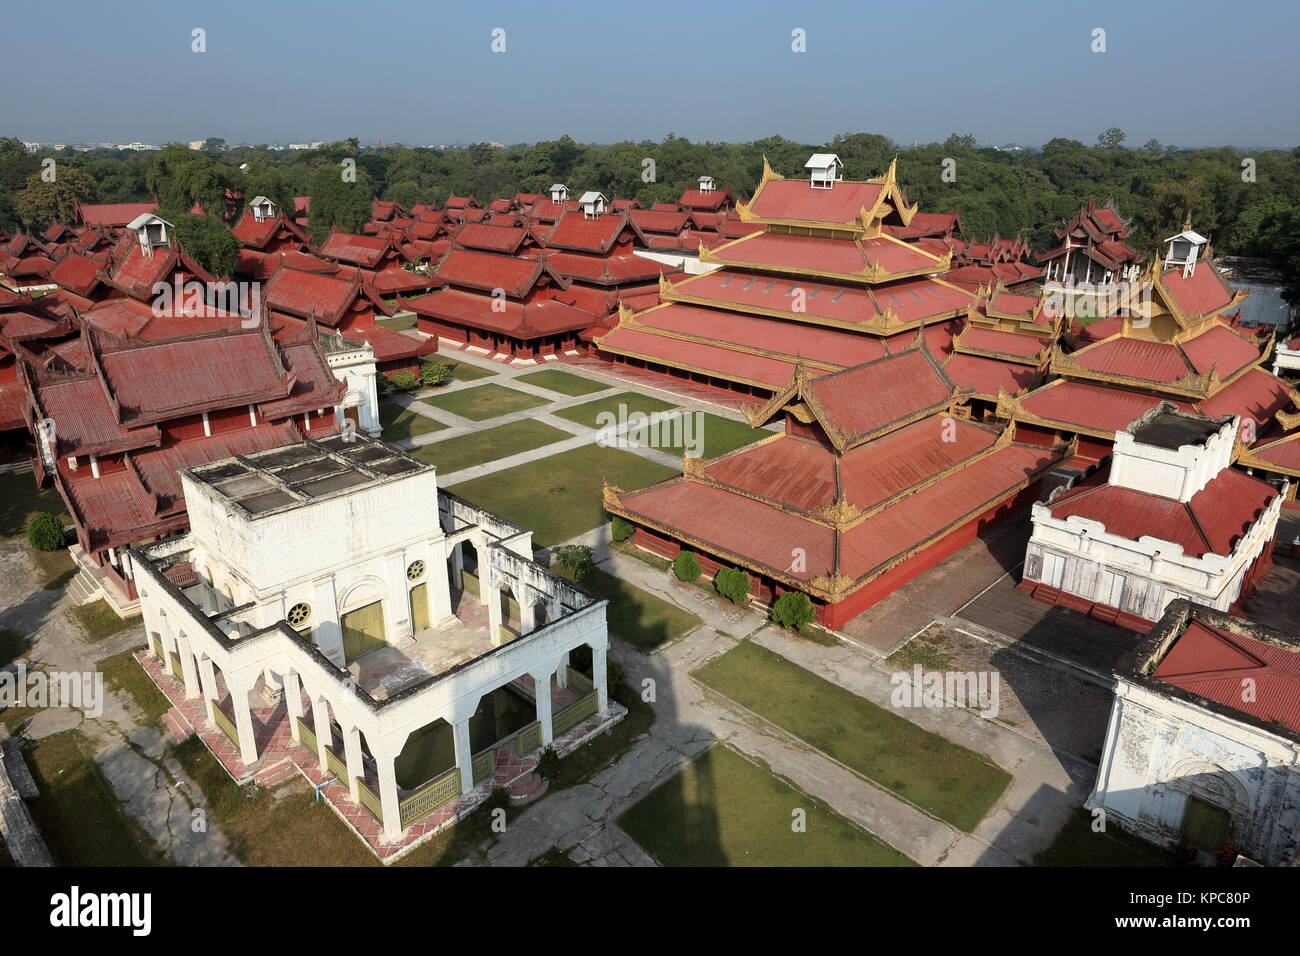 the royal palace of mandalay in myanmar Stock Photo